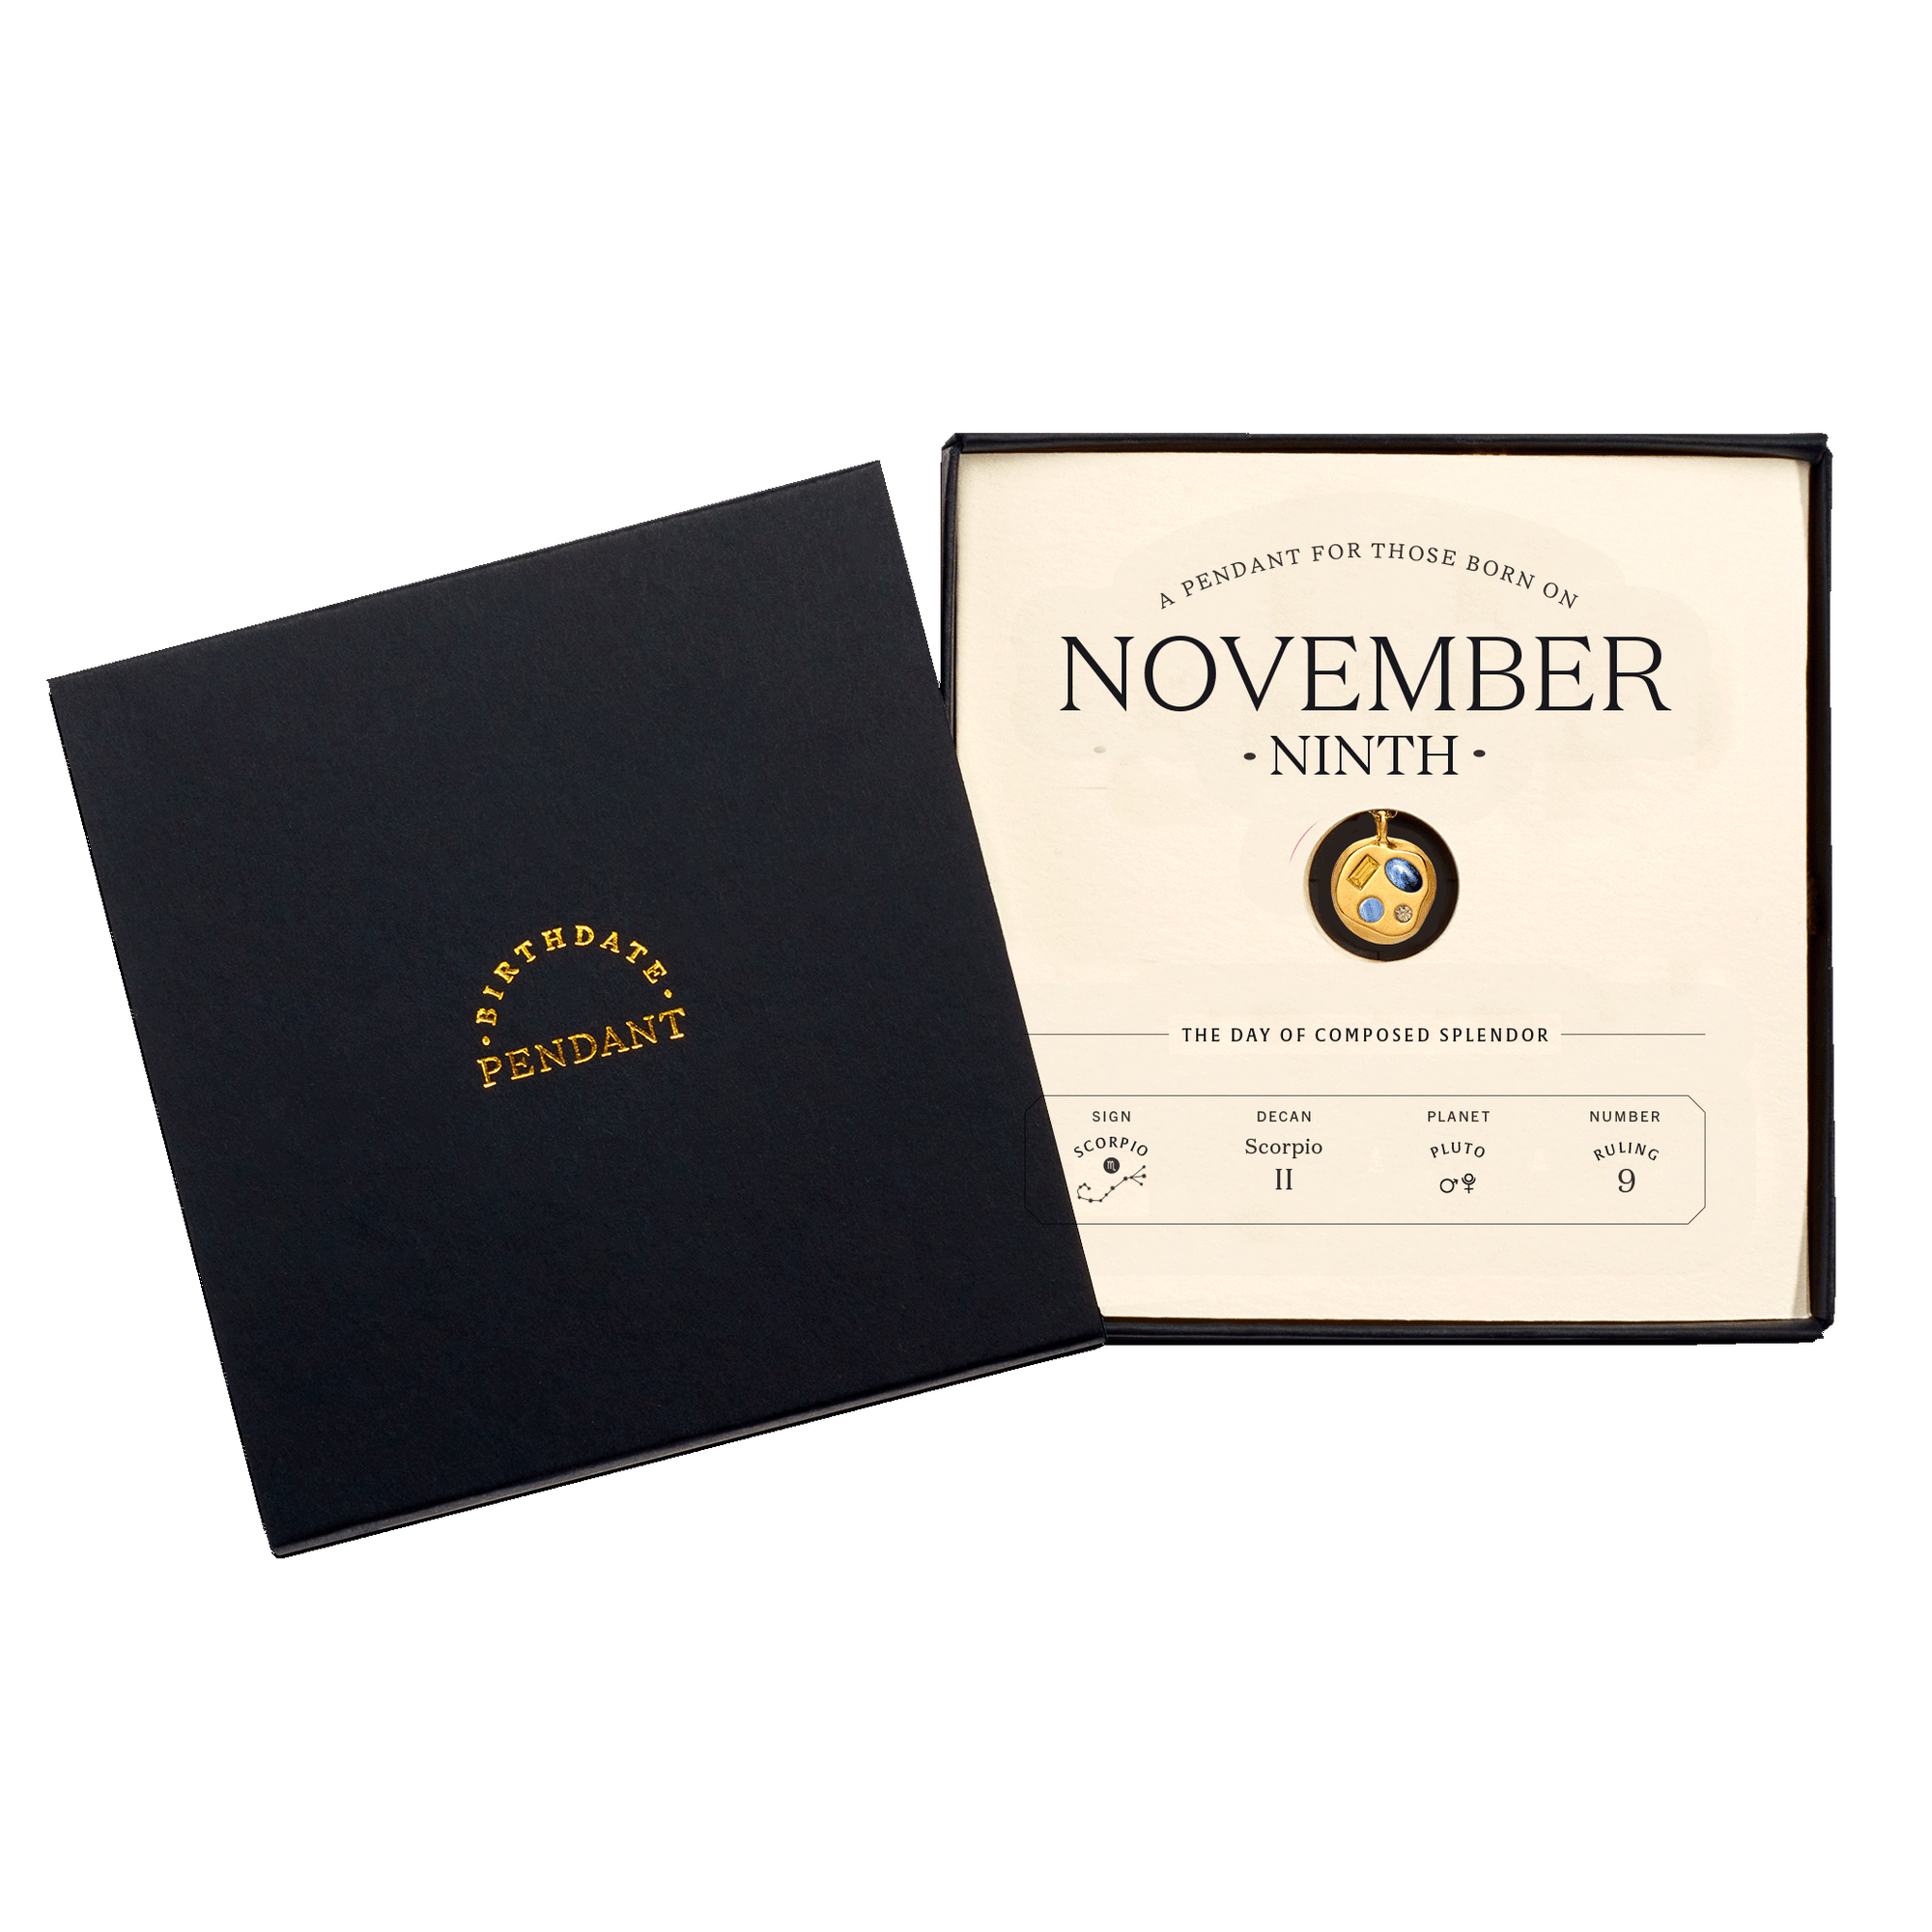 The November Ninth Pendant inside its box